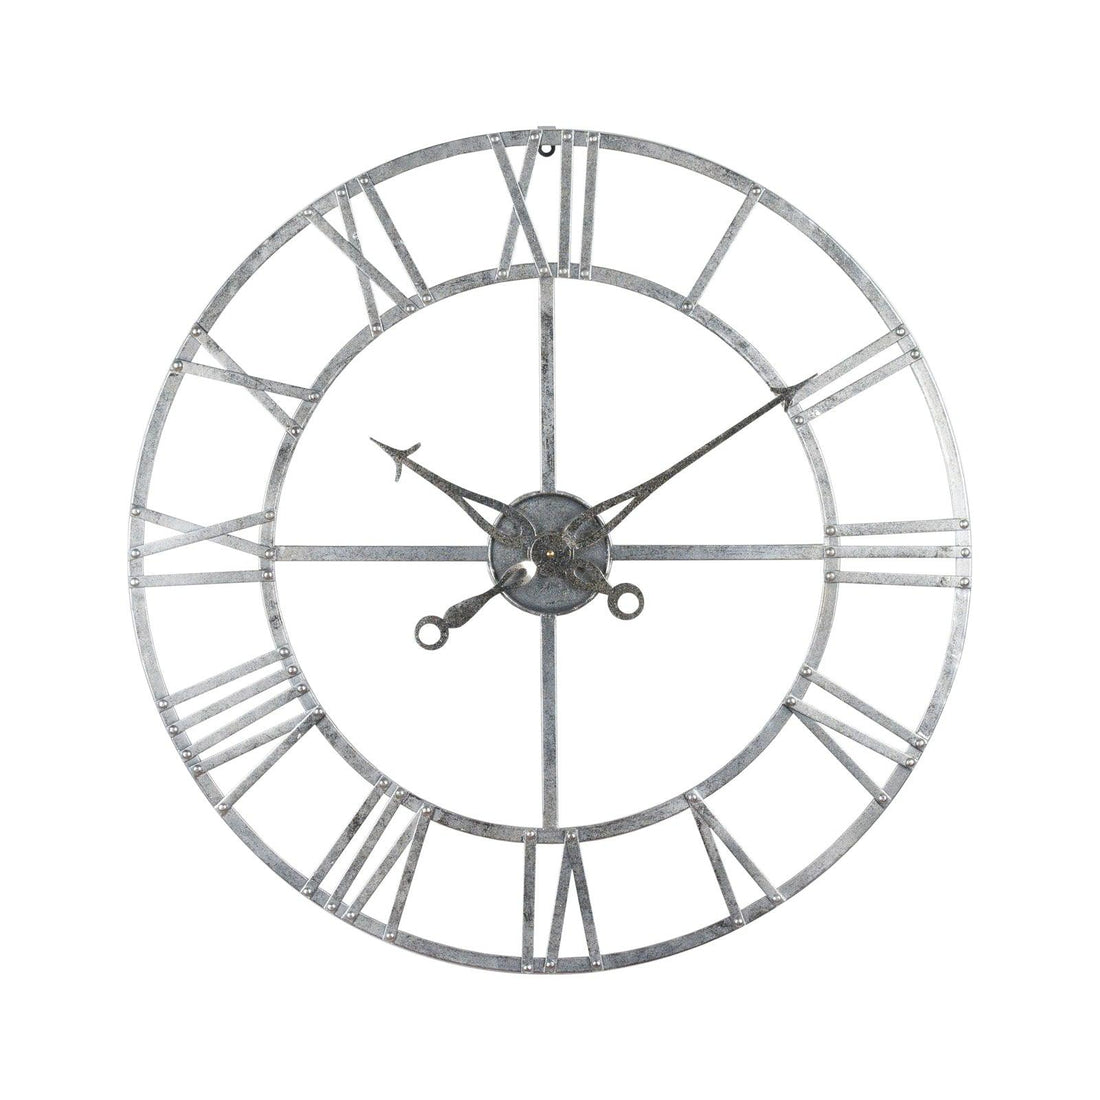 Silver Foil Skeleton Wall Clock - £119.95 - Wall Clocks 